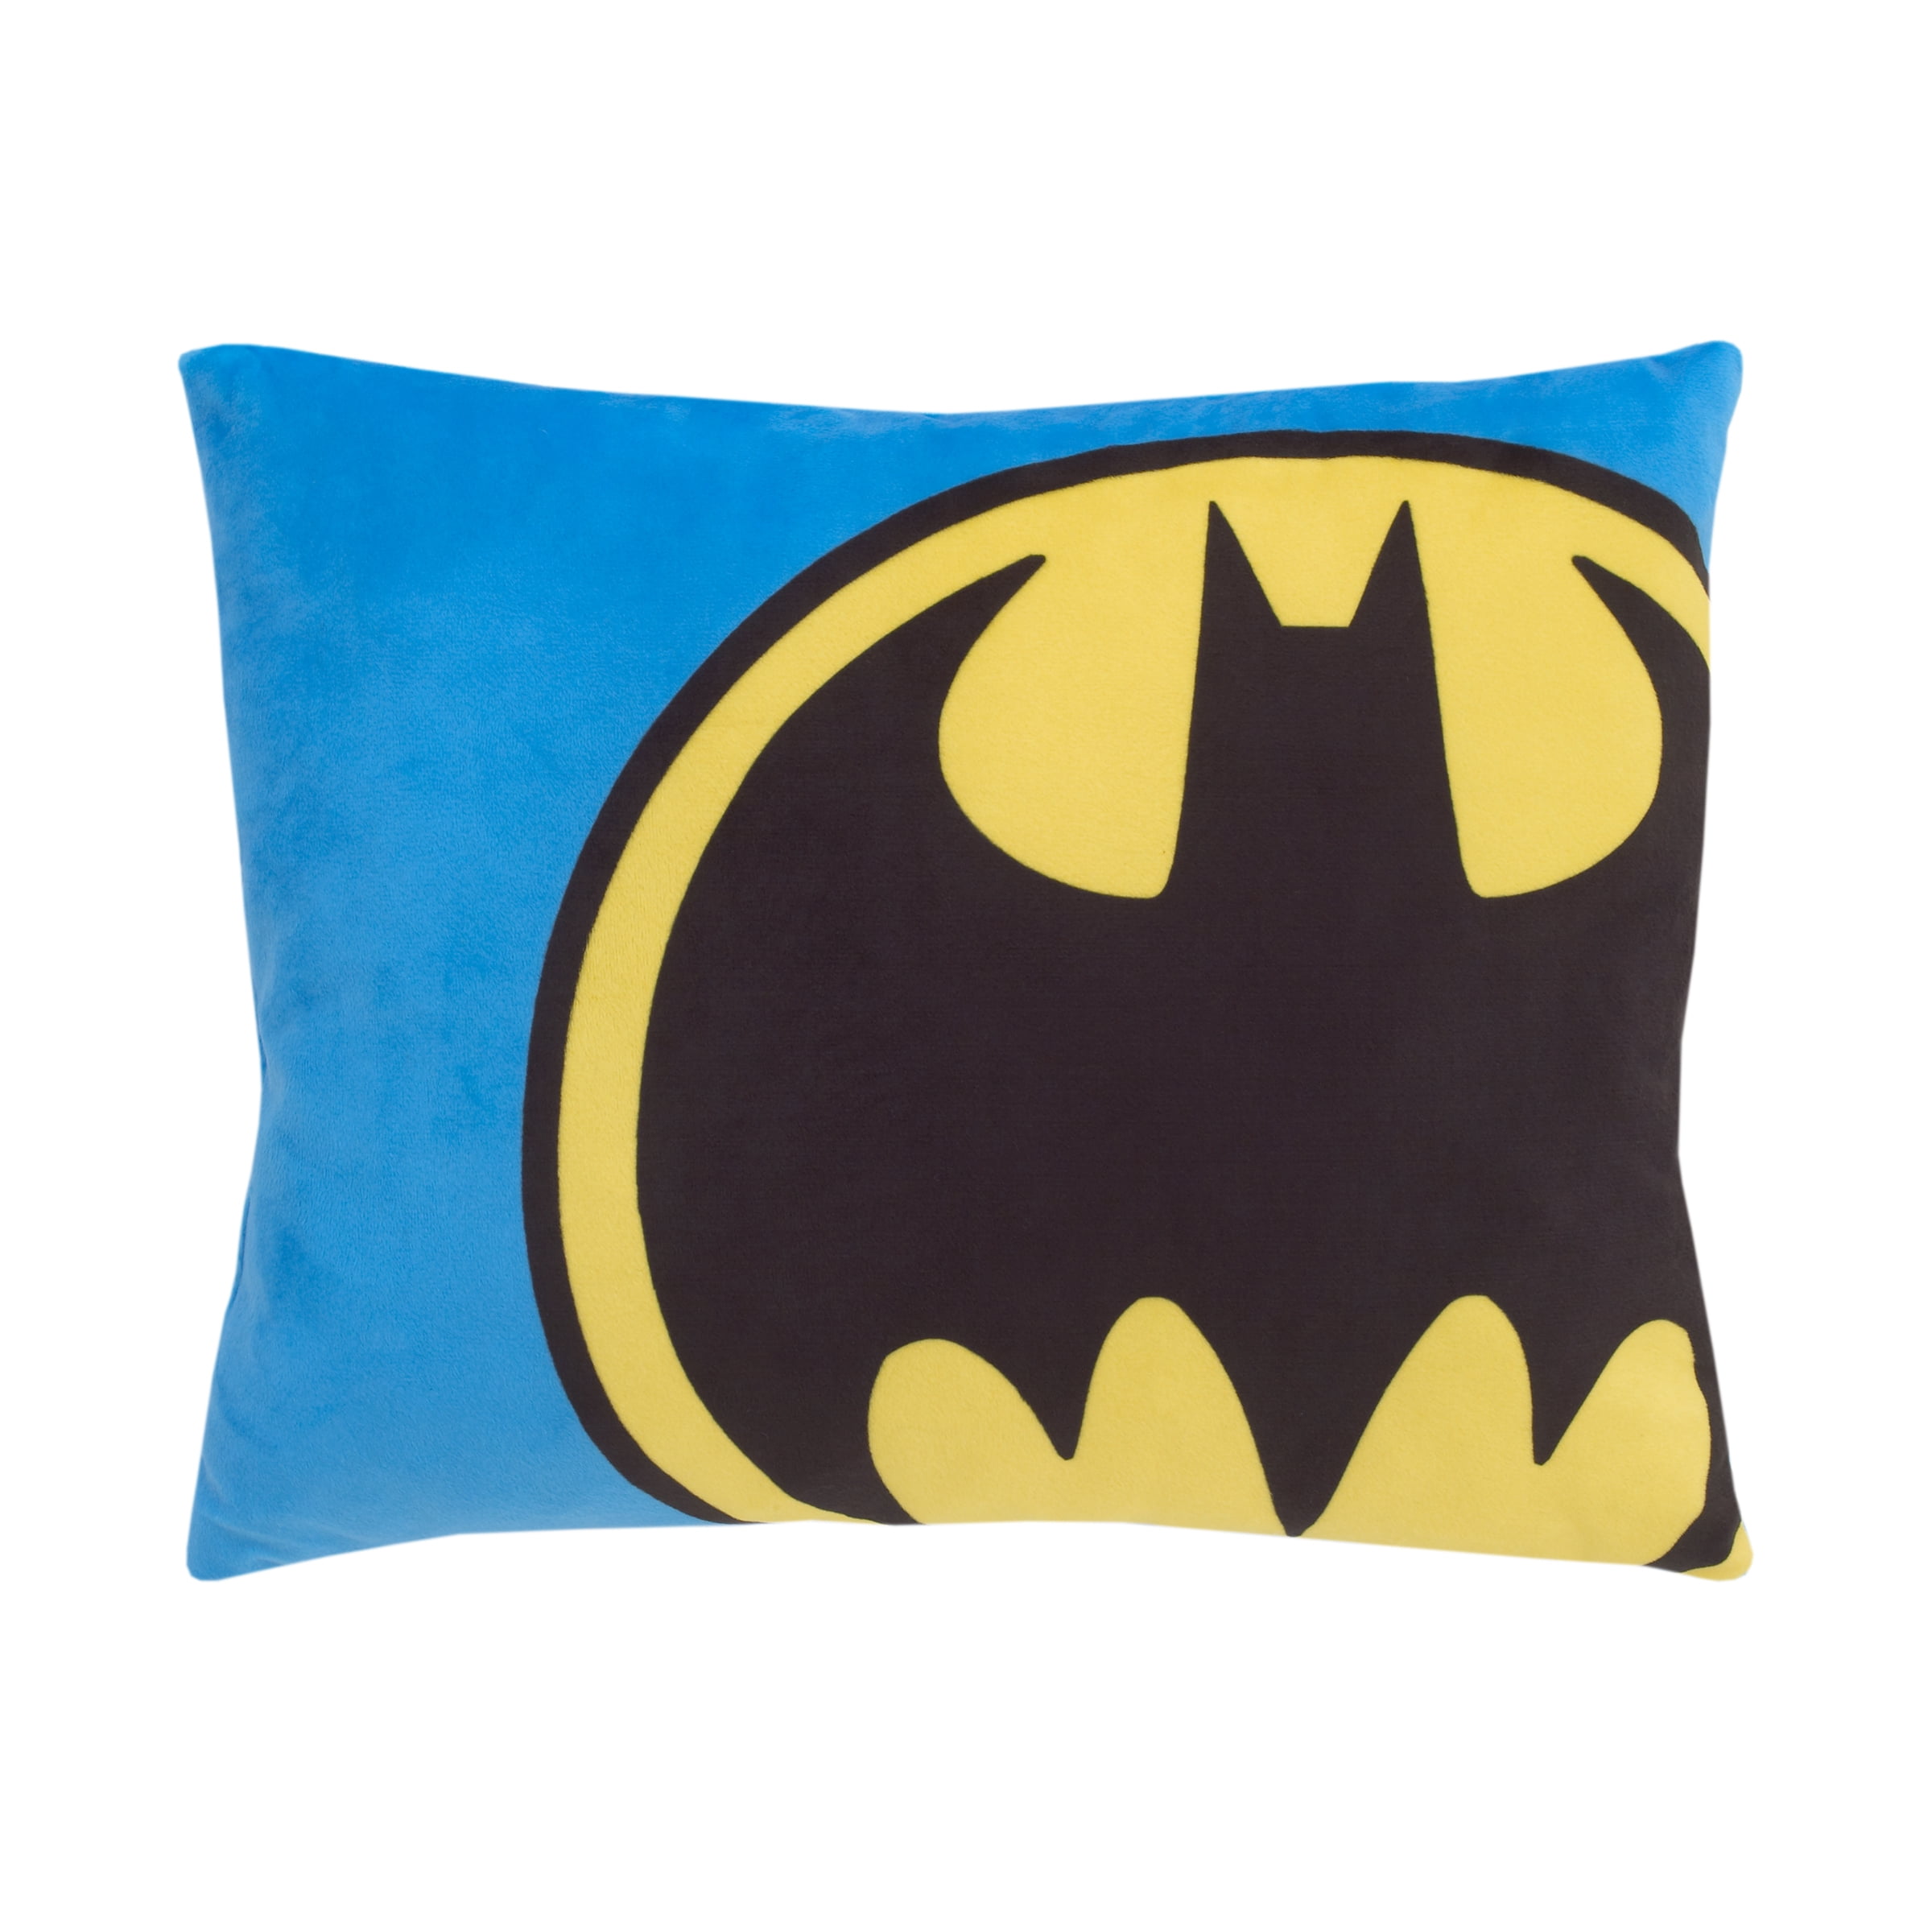 Set of 2 Marvel Batman cushion cover decorative throw pillow covers 